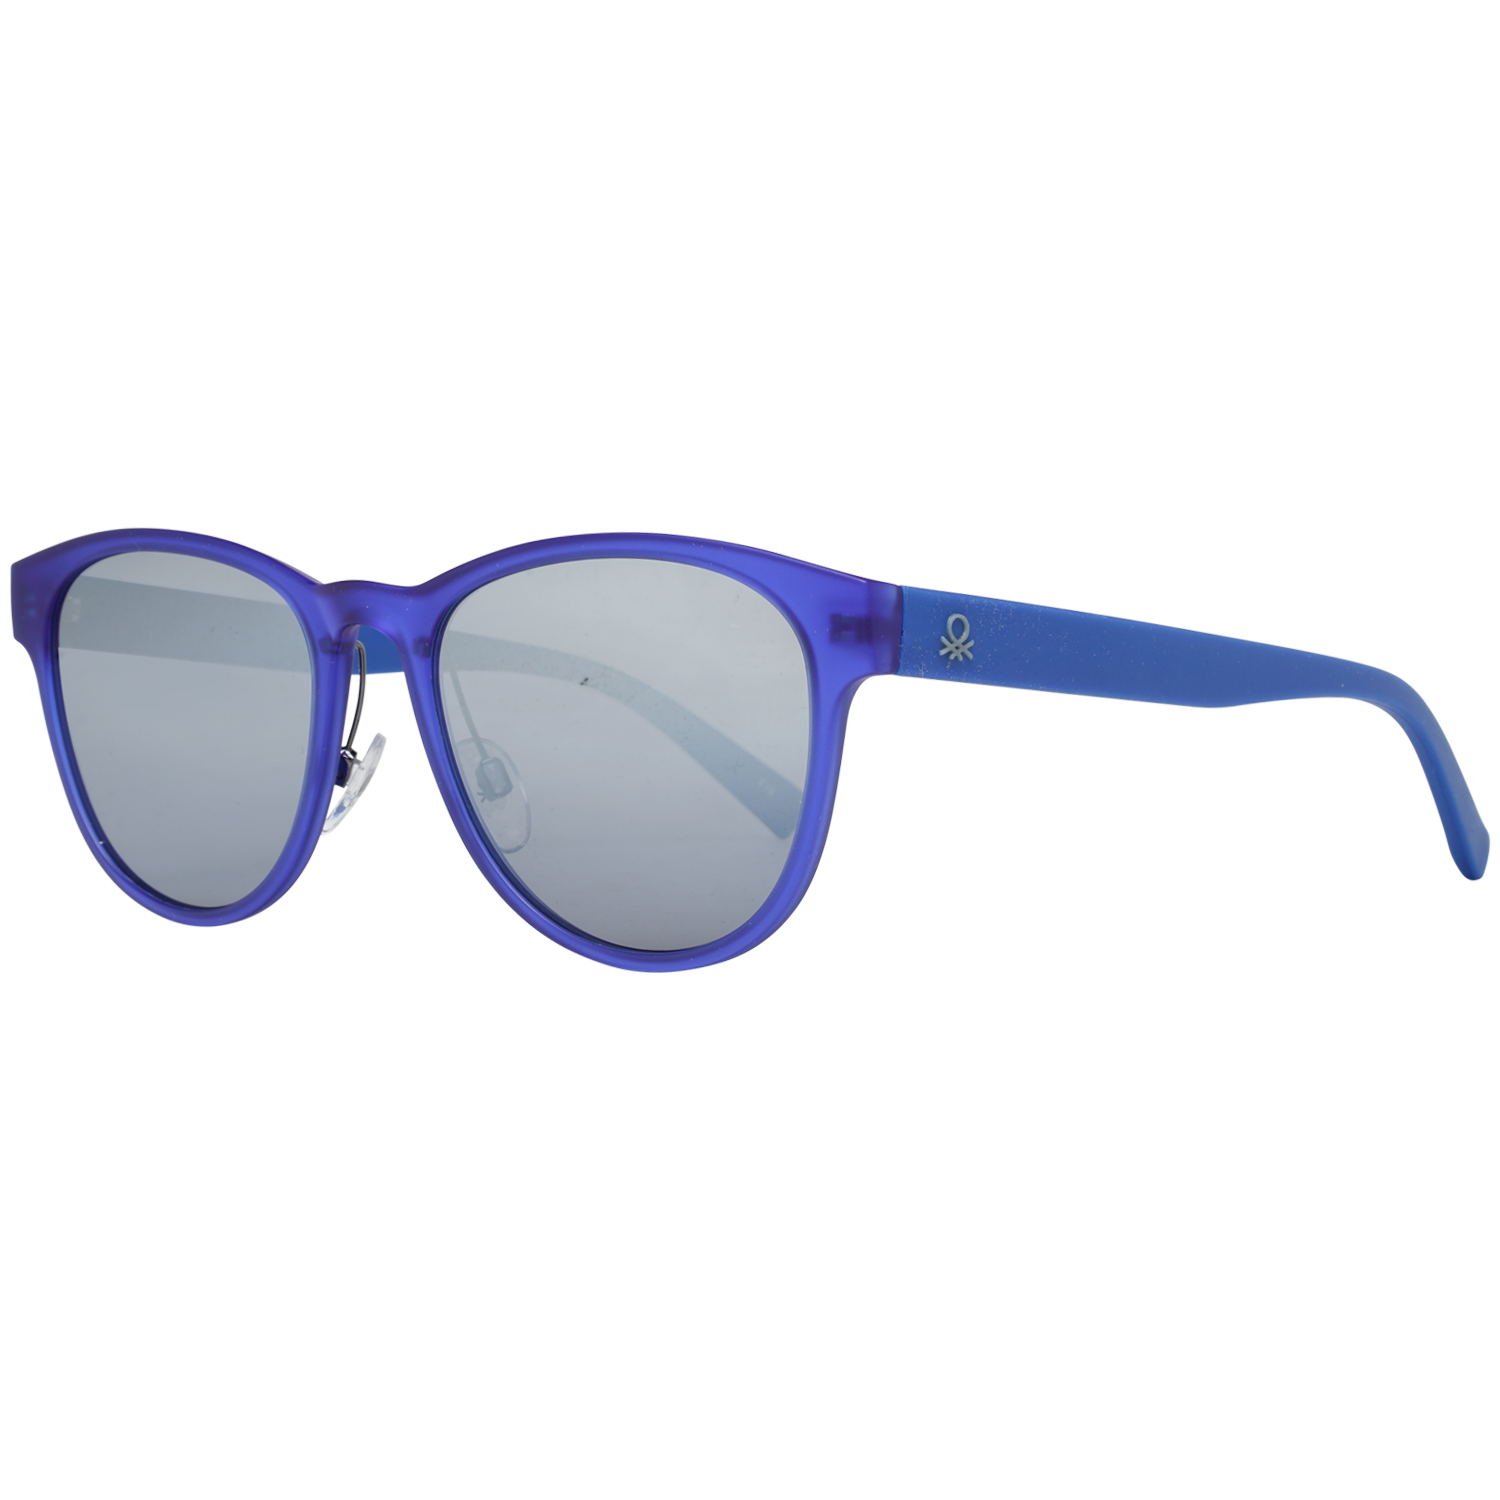 Benetton Sunglasses BE5011 603 55 Blue